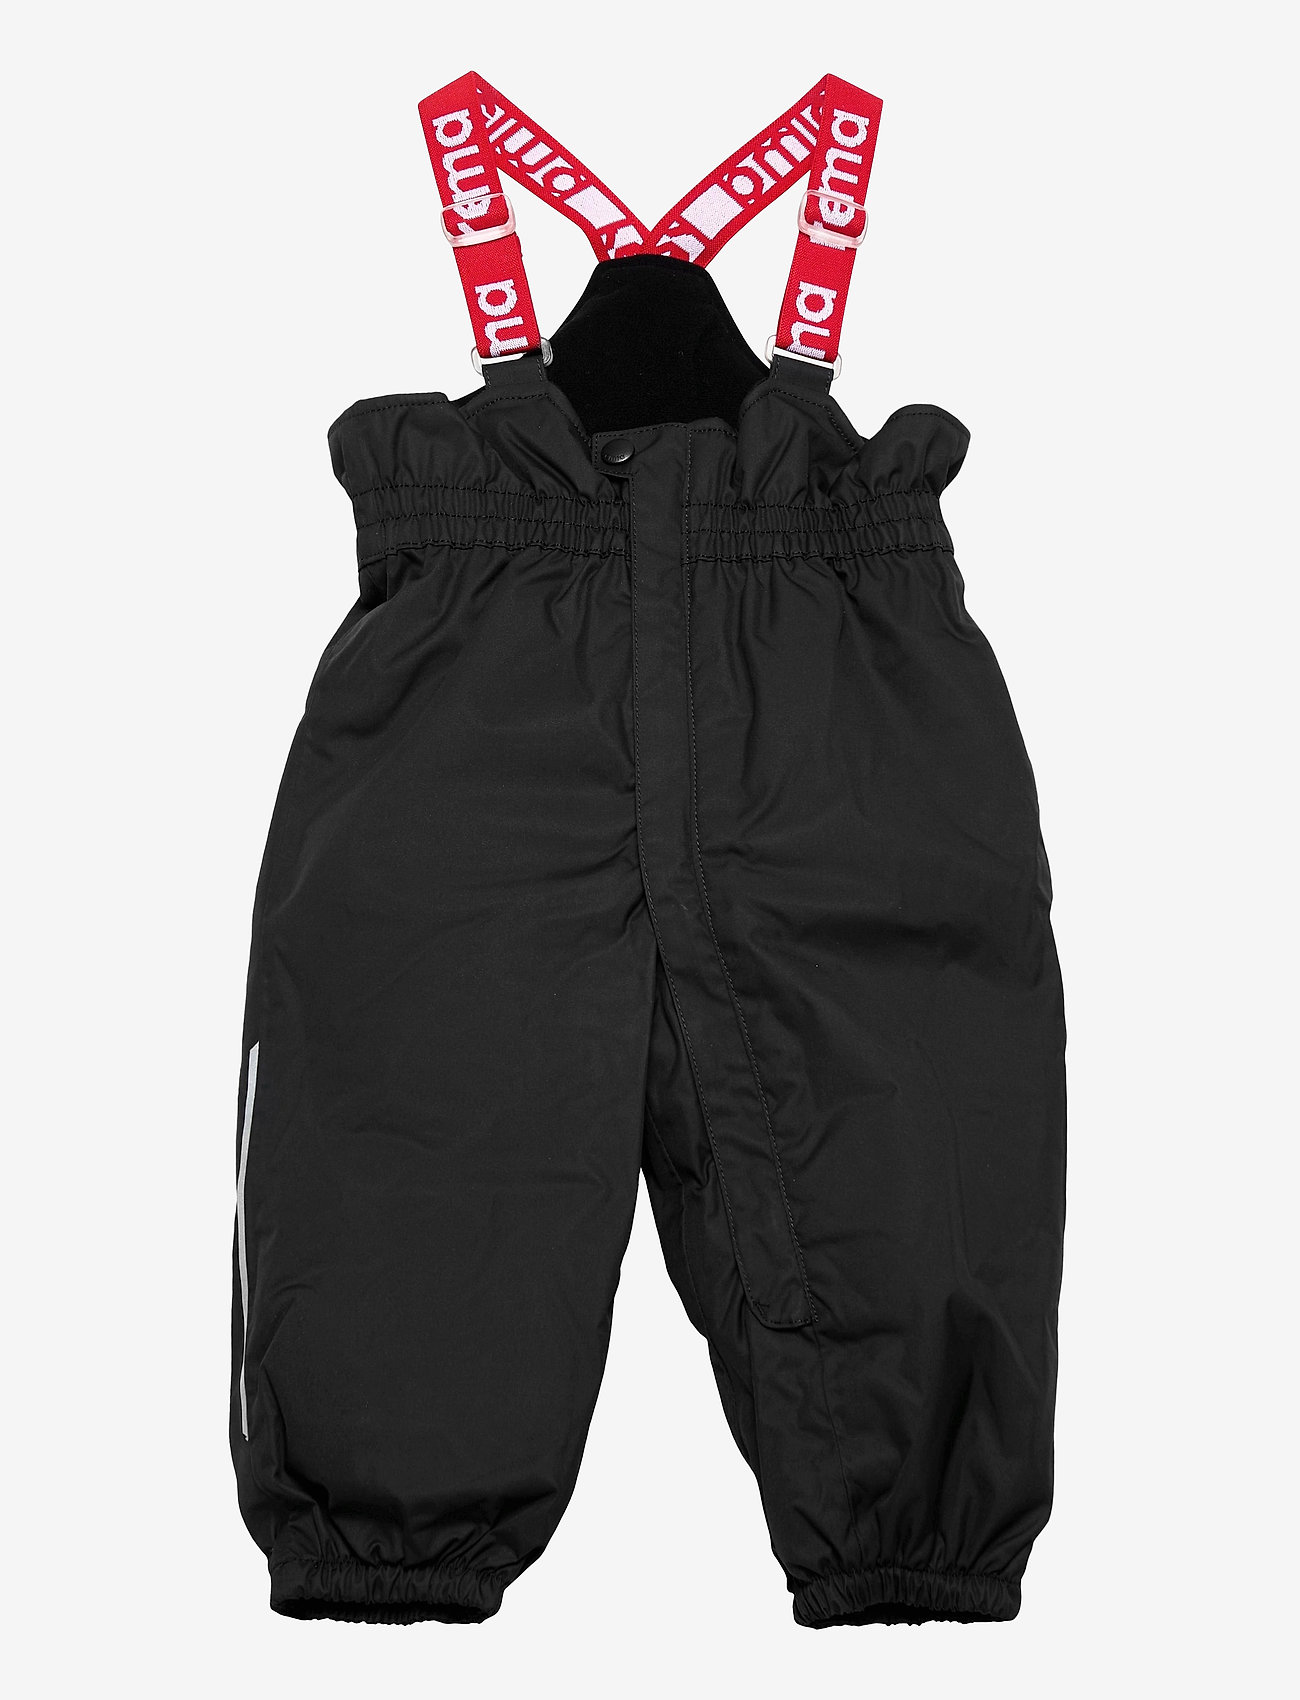 Reima - Reimatec winter pants, Stockholm Black,92 cm - winter trousers - black - 0